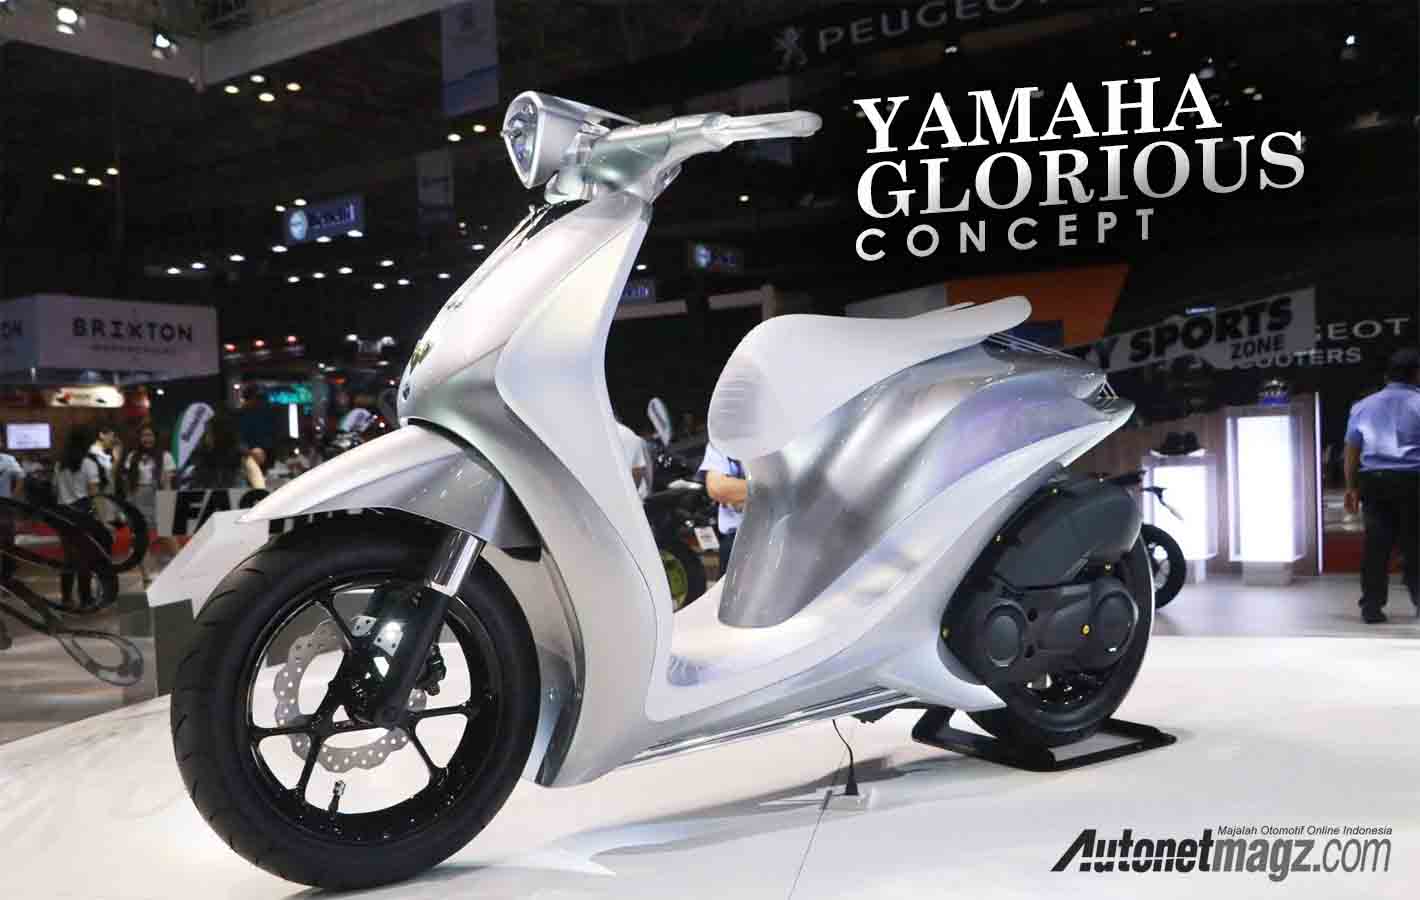 Berita, cover yamaha glorious: Yamaha Perkenalkan Glorious Concept, Skutik Cantik Nan Futuristis